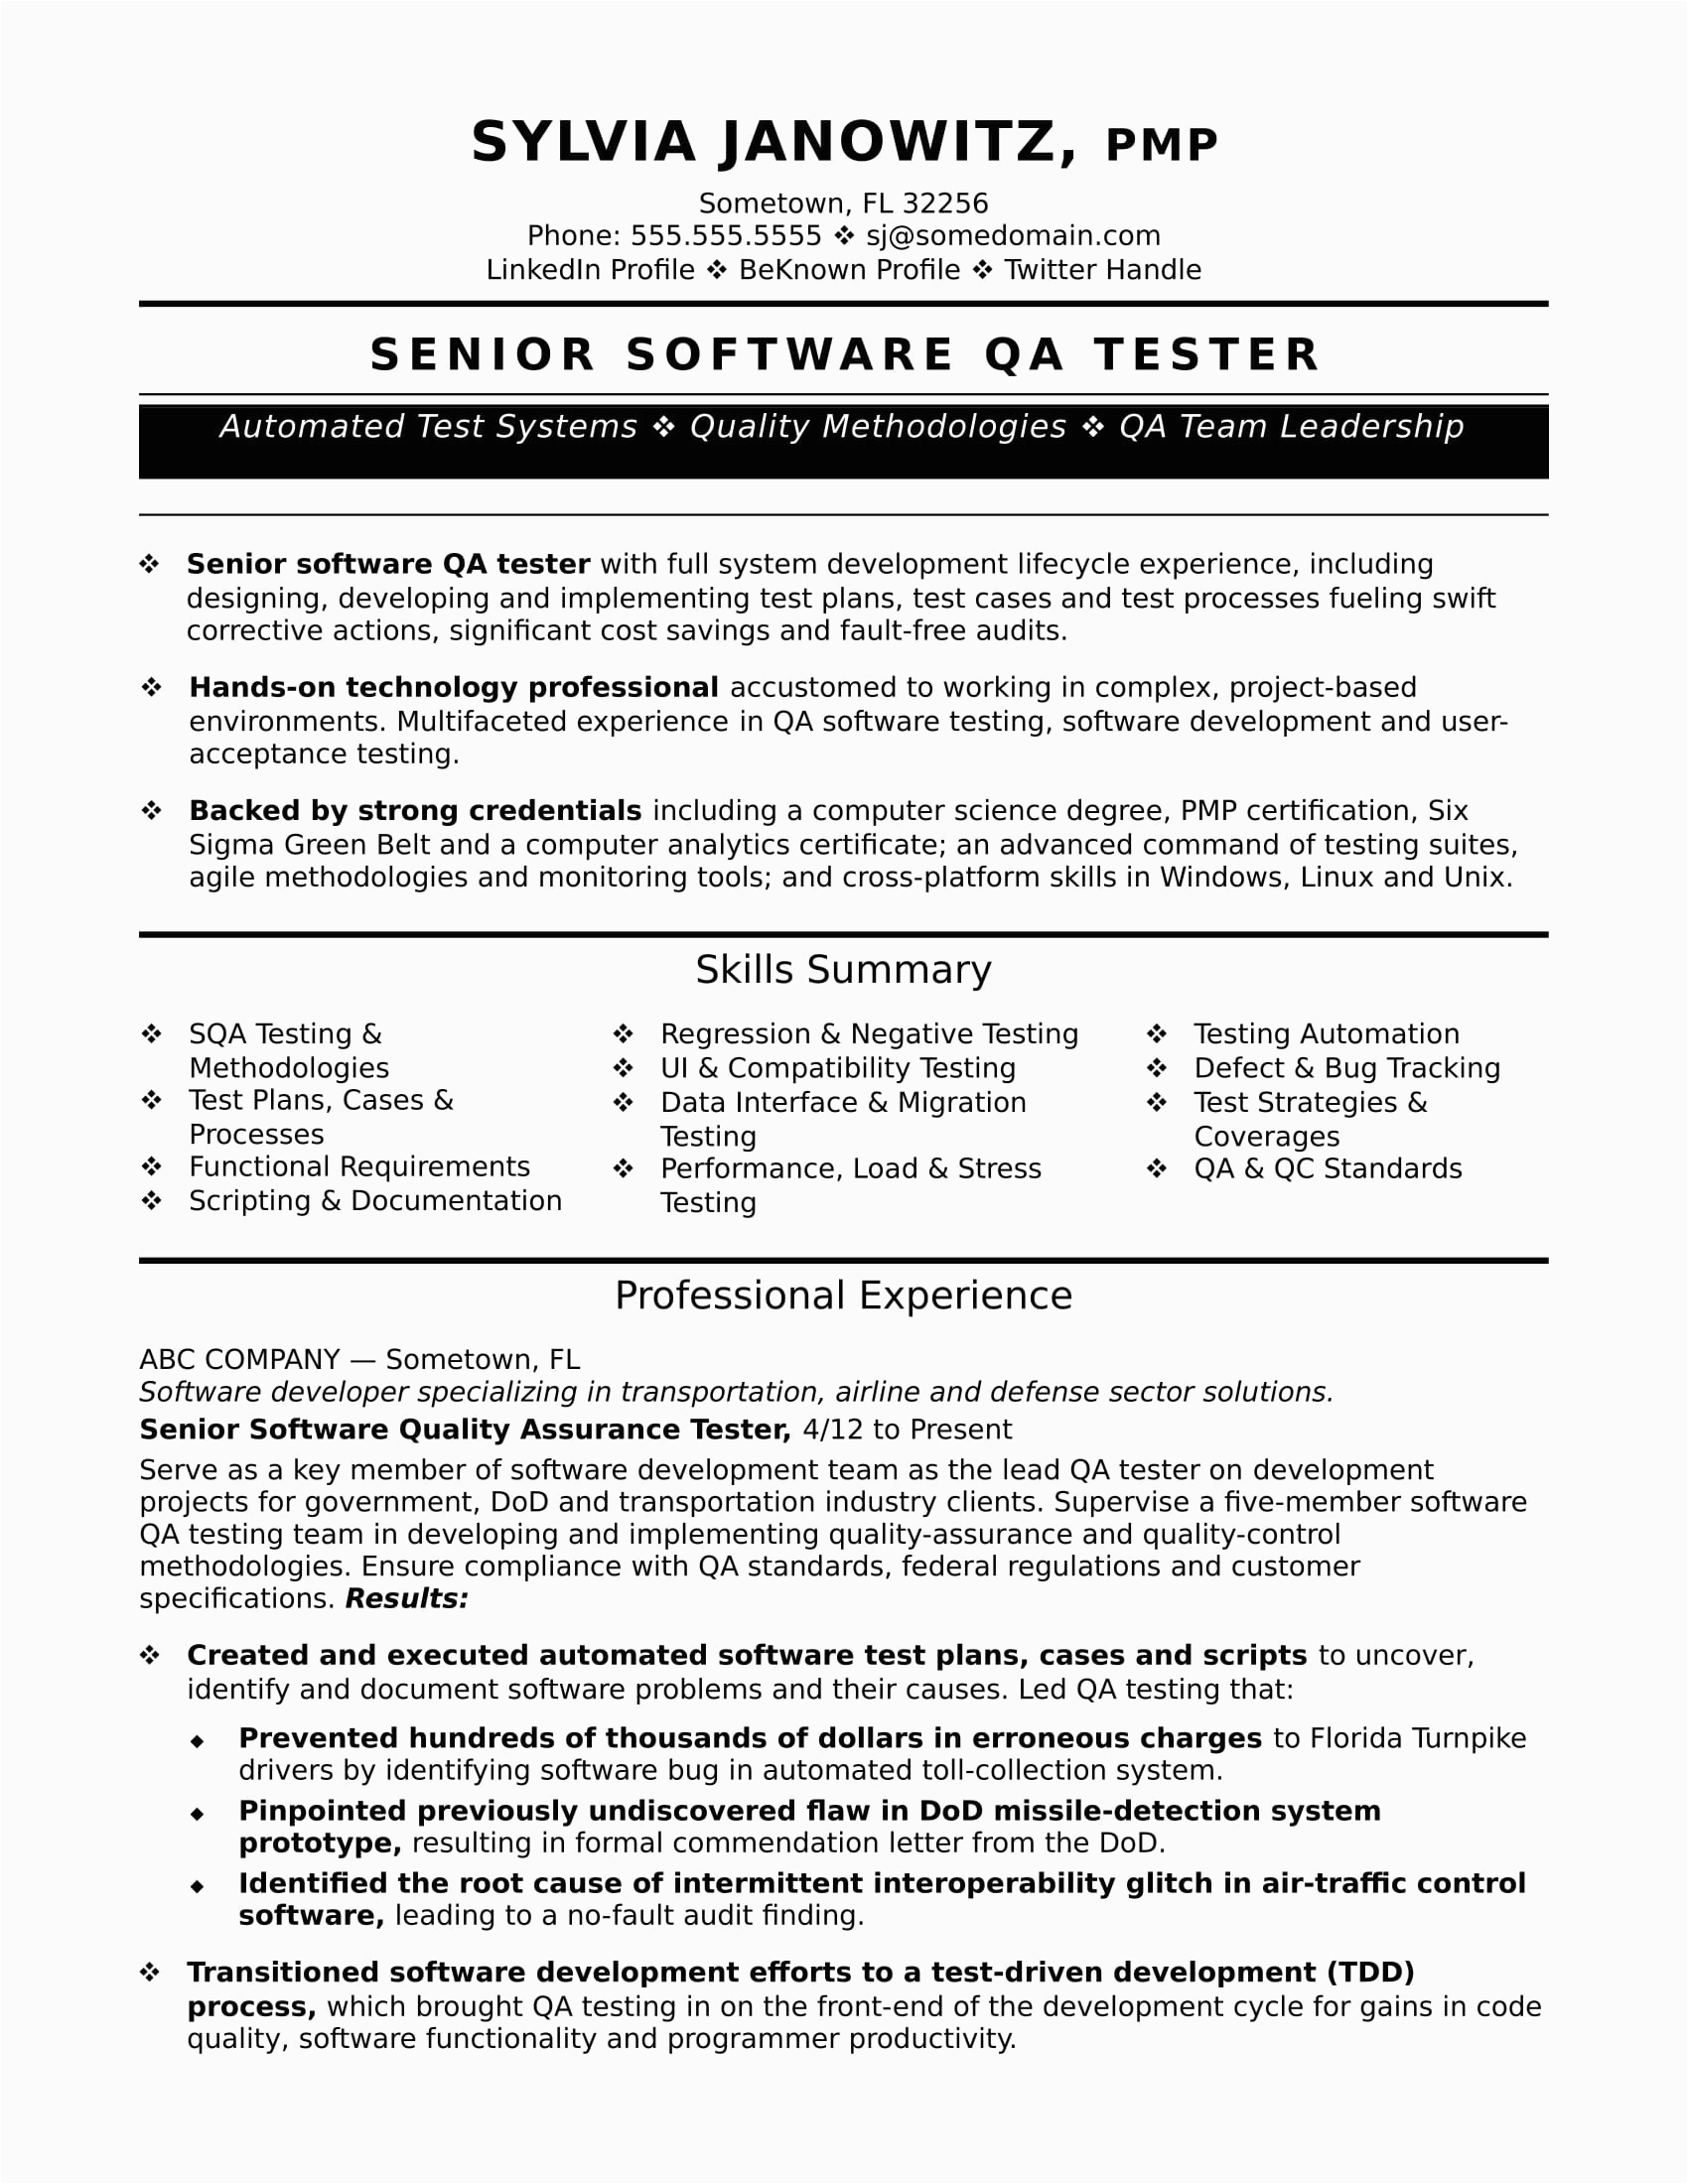 Entry Level Qa software Tester Resume Sample Experienced Qa software Tester Resume Sample